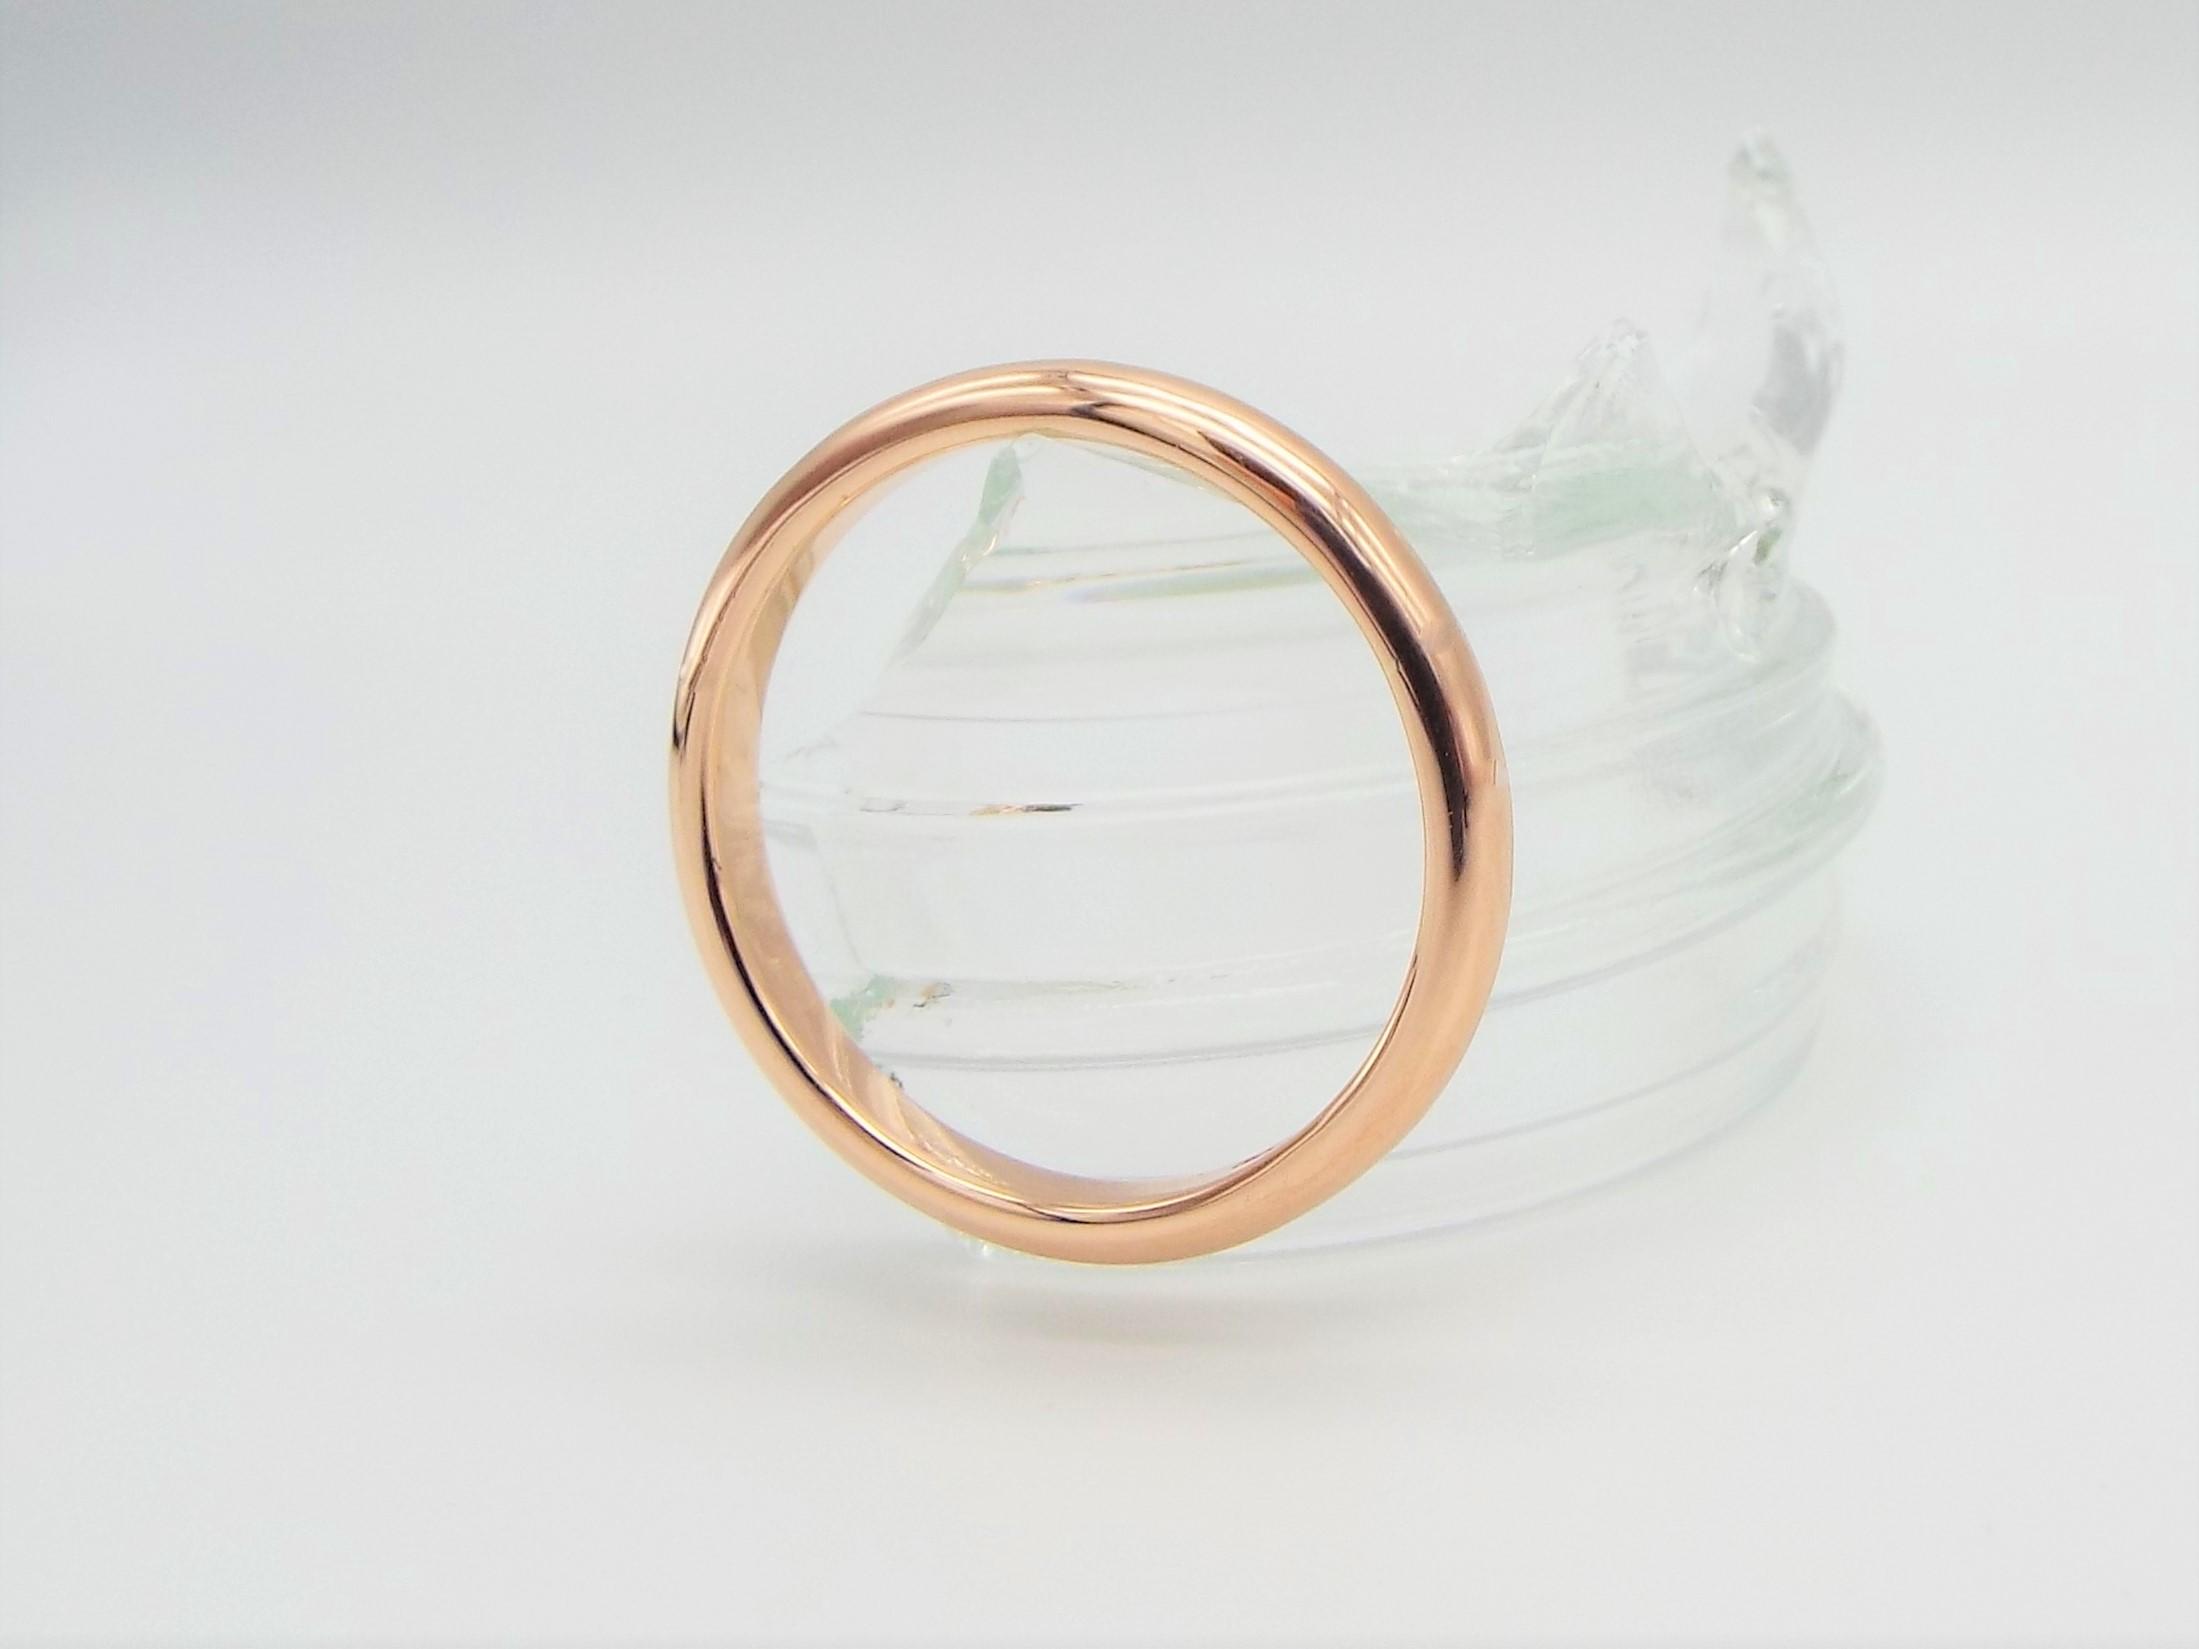 3mm-4mm Medium Weight 9ct Rose Gold Hallmarked D Profile Wedding Ring 